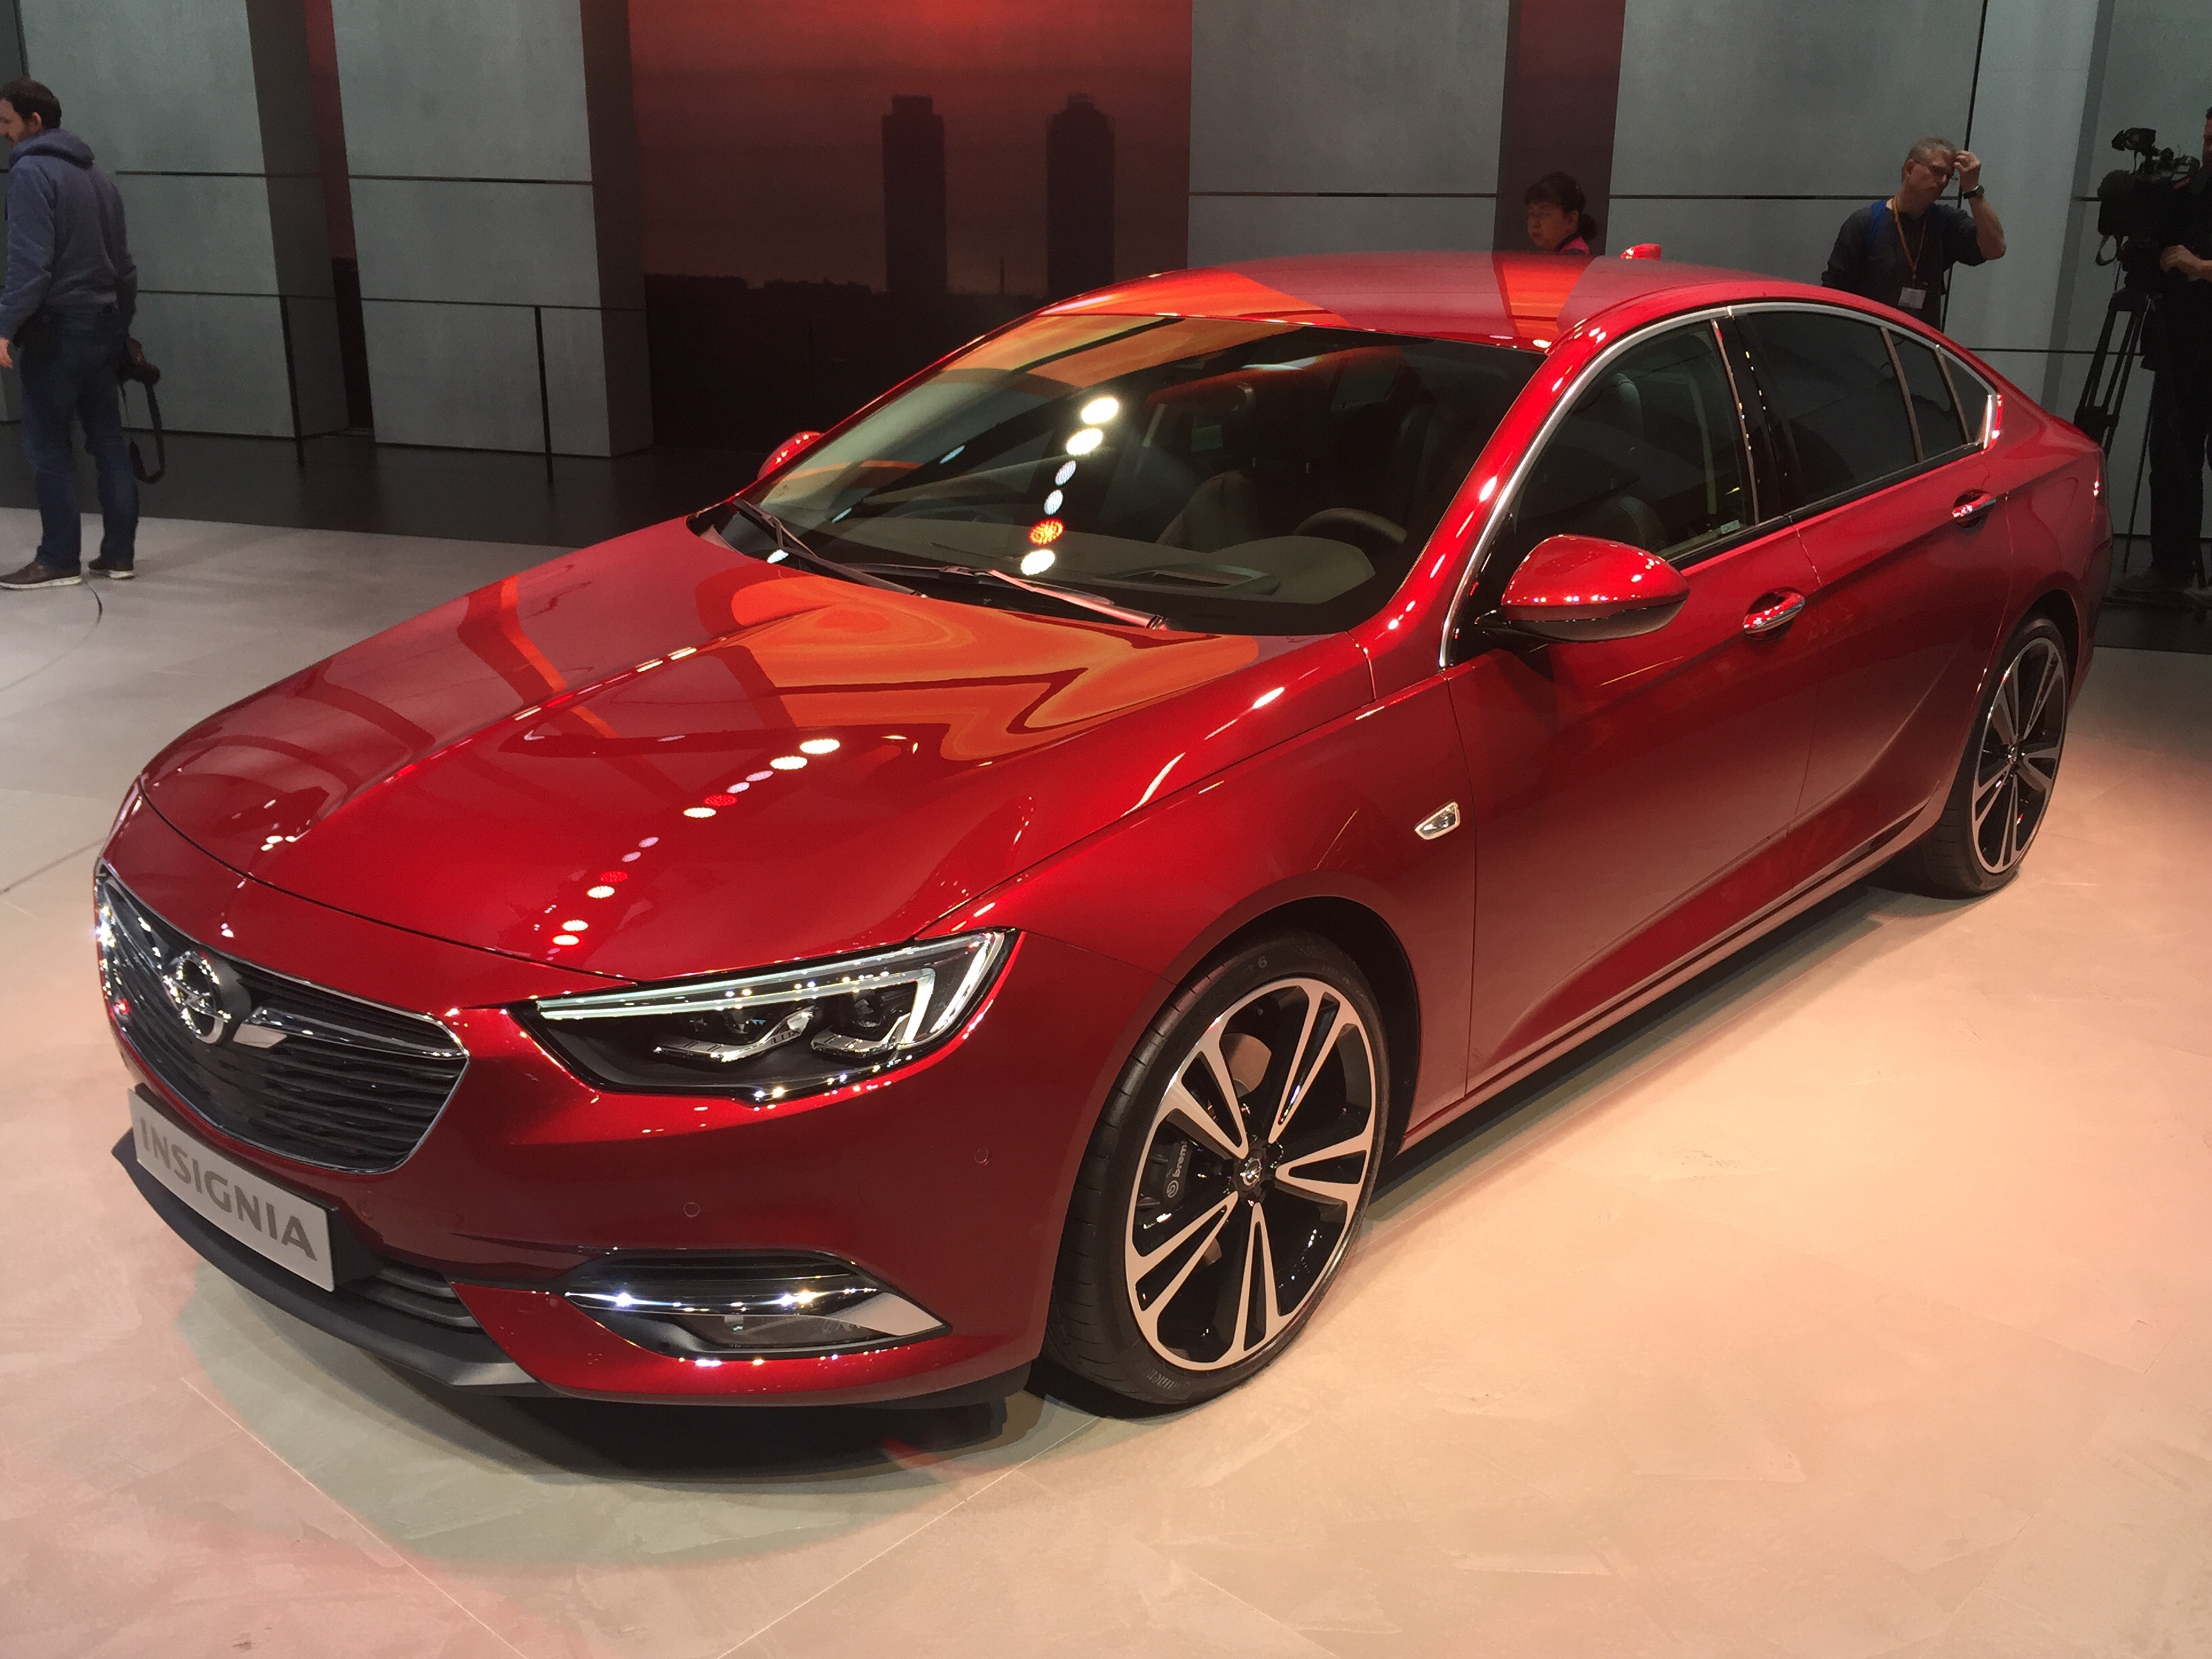 Opel Insignia Grand Sport modern specifications